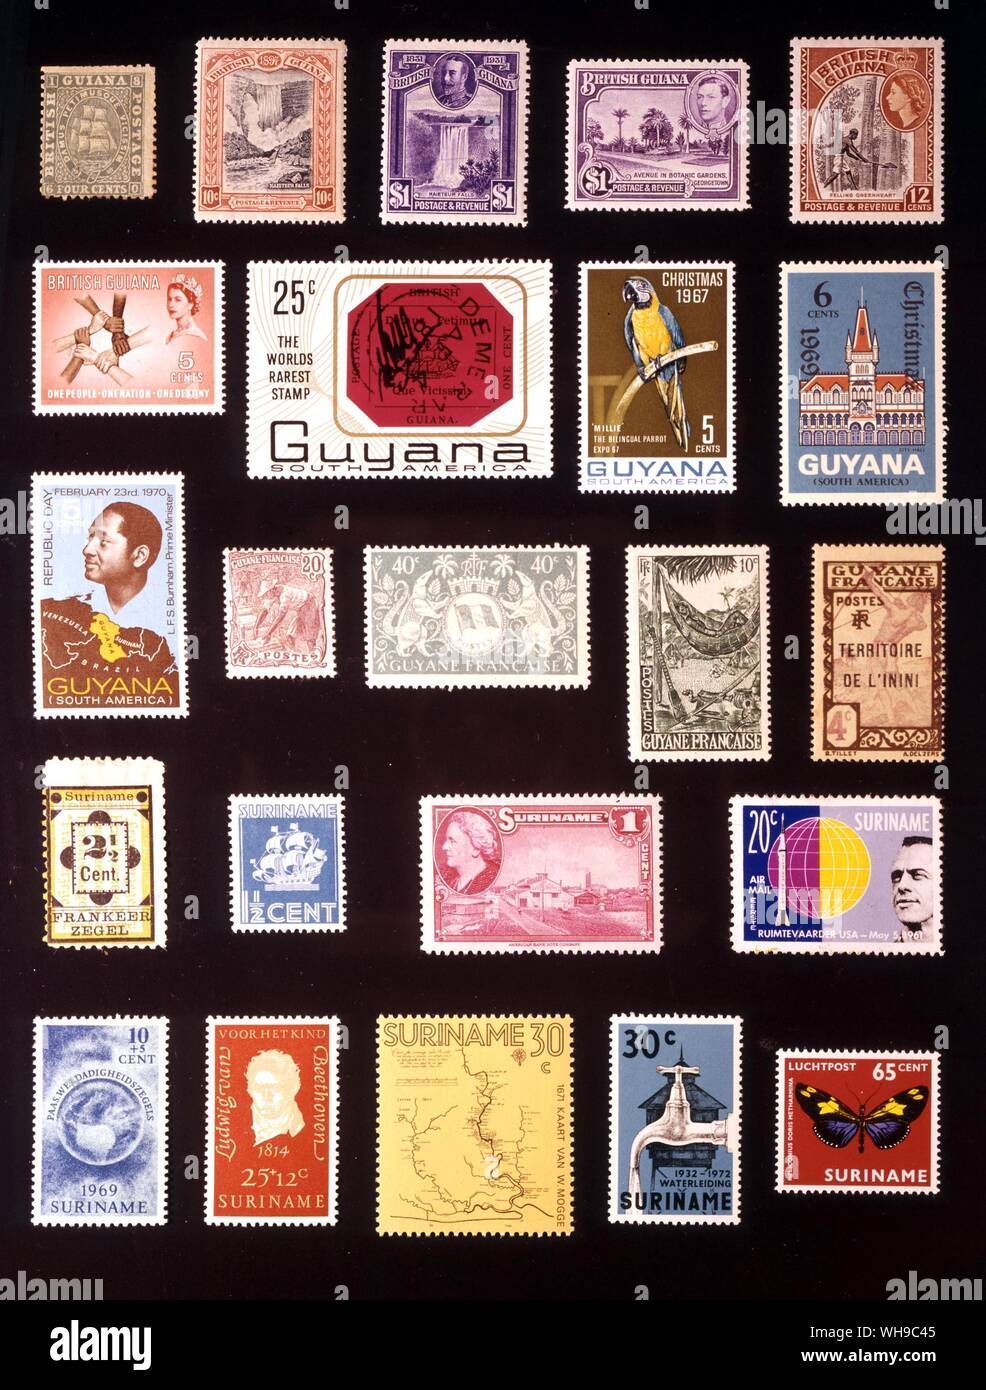 Nord - LA GUYANE : (de gauche à droite) 1. Guyane britannique, 4 cents, 1860, 2. Guyane britannique, 10 cents, 1898, 3. Guyane britannique, 1 dollar, 1931, 4. Guyane britannique, 1 dollar, 1938, 5. Guyane britannique, 12 cents, 1954, 6. Guyane britannique, 5 cents, 1961, 7. Guyana, 25 cents, 1967, 8. Guyana, 5 cents, 1969, 9. Guyana, 6 cents, 1969, 10. Guyana, 5 cents, 1970, 11. Guyane, 20 centimes, 1904, 12. Guyane, 40 centimes, 1945, 13. Guyane, 10 centimes, 1947, 14. Inini, 4 centimes, 1932, 15. Le Surinam, 2,5 cents, 1892, 16. Le Surinam, 1,5 cents, 1936, 17. Le Surinam, 1 100, 1945, 18. Le Surinam, 20 Banque D'Images